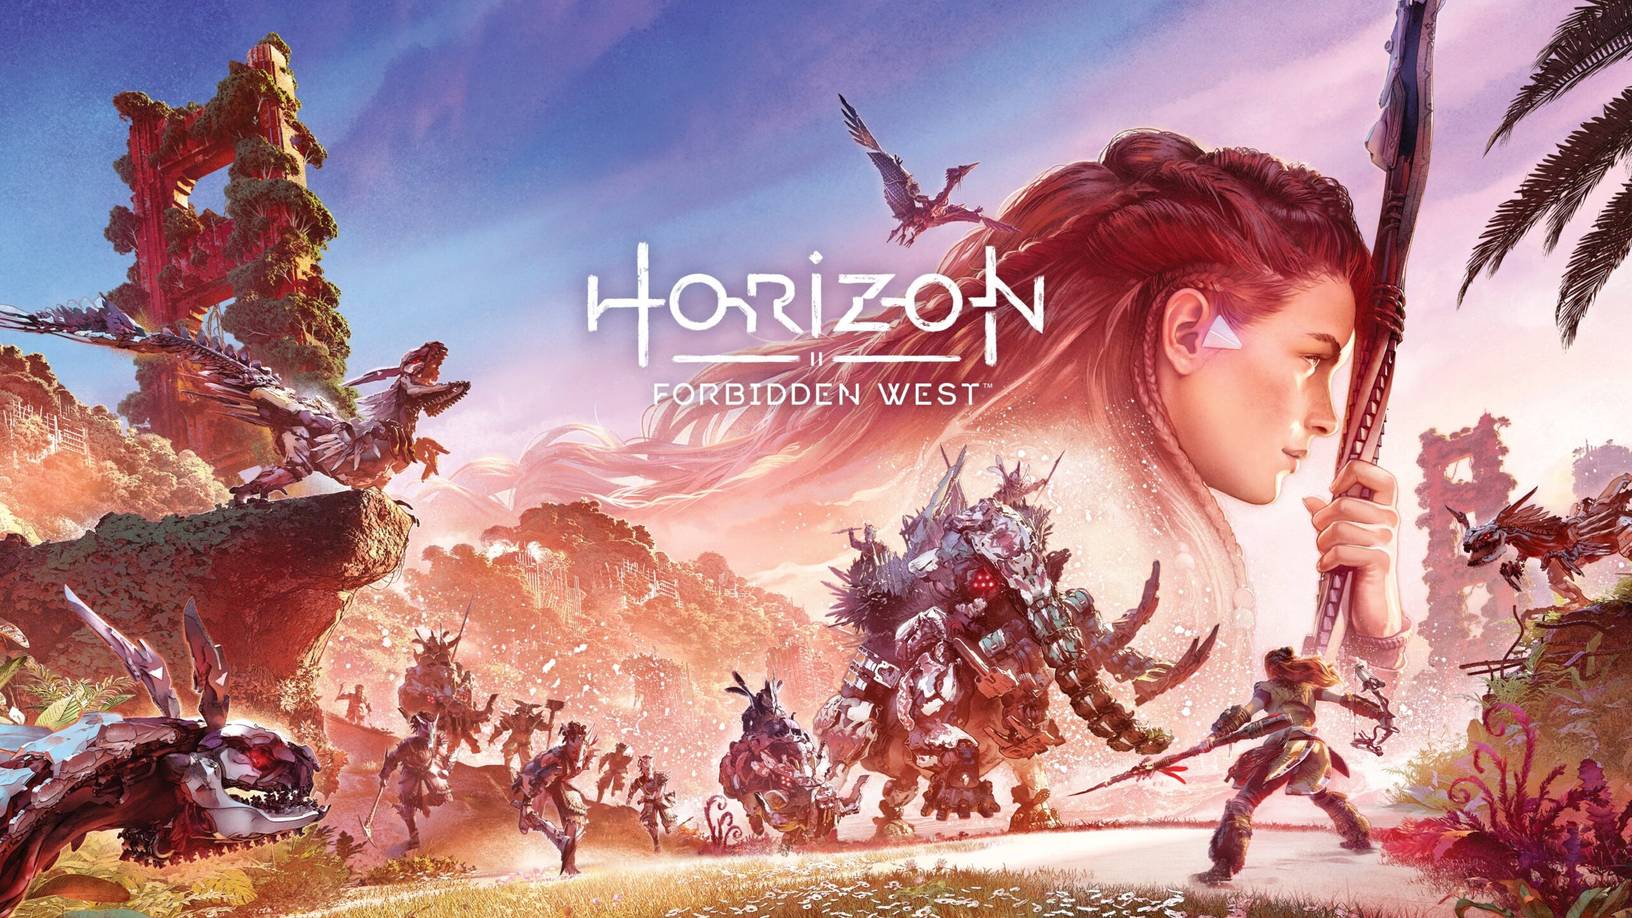 Horizon forbidden west review